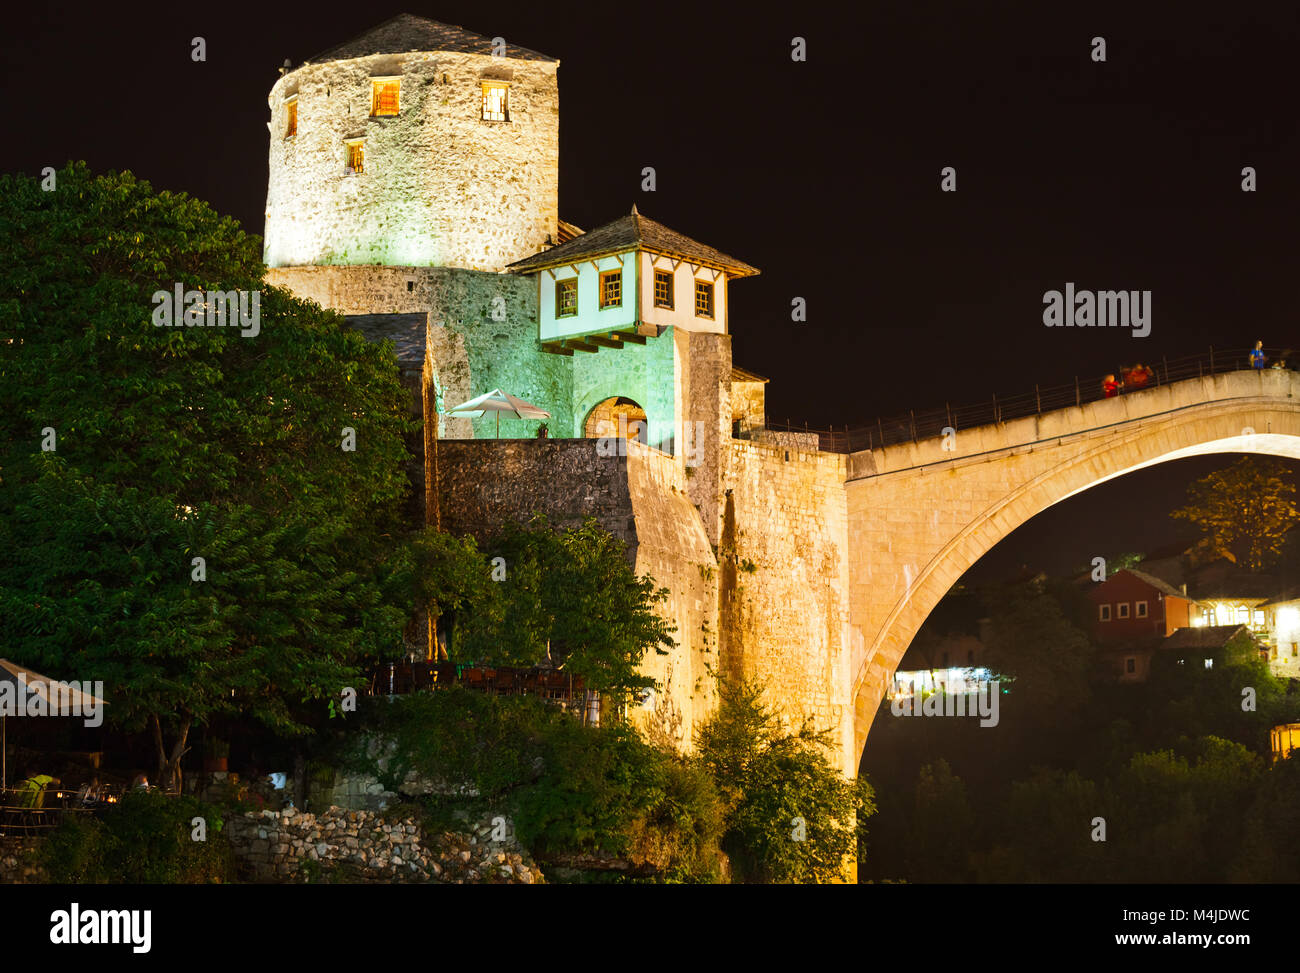 Old Bridge in Mostar - Bosnia and Herzegovina Stock Photo